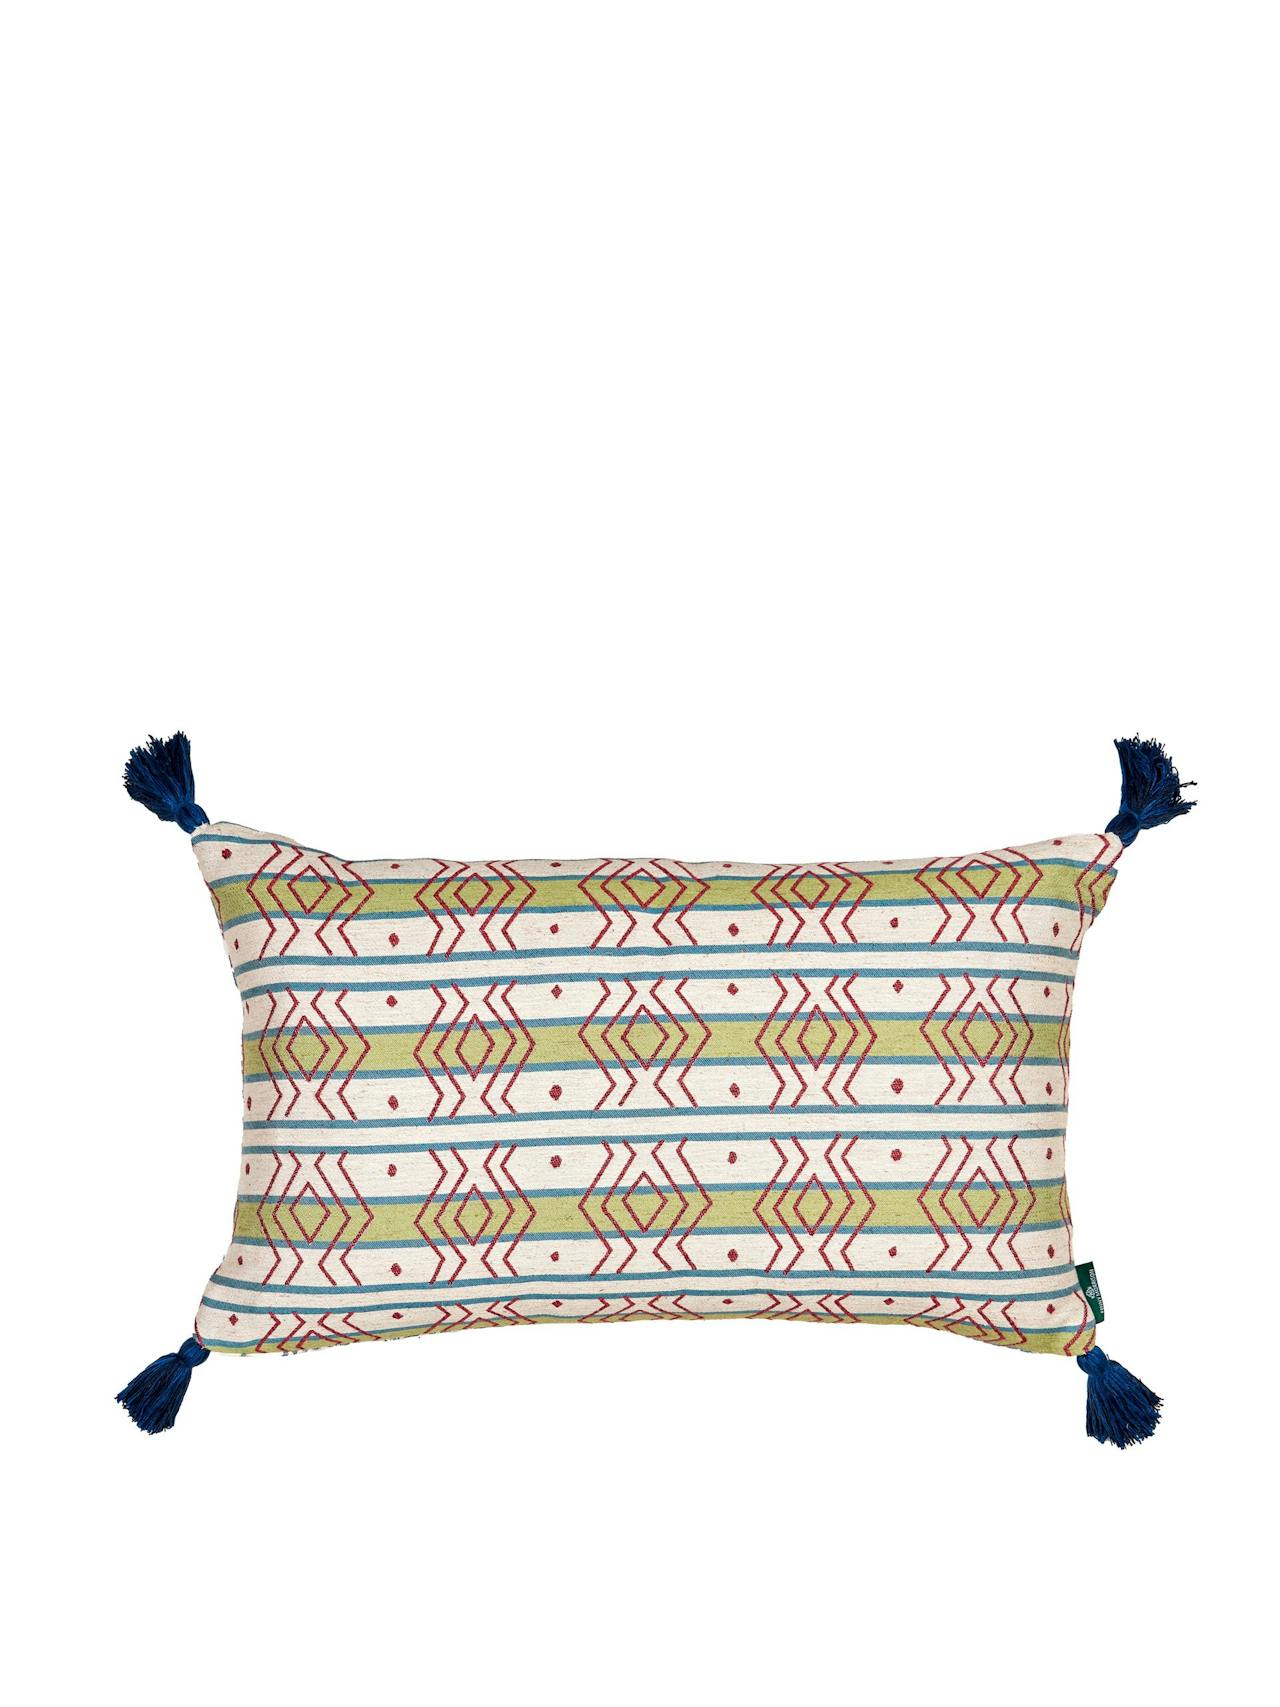 Azteca stripe leaf and ashok petrol cushion with blue tassels